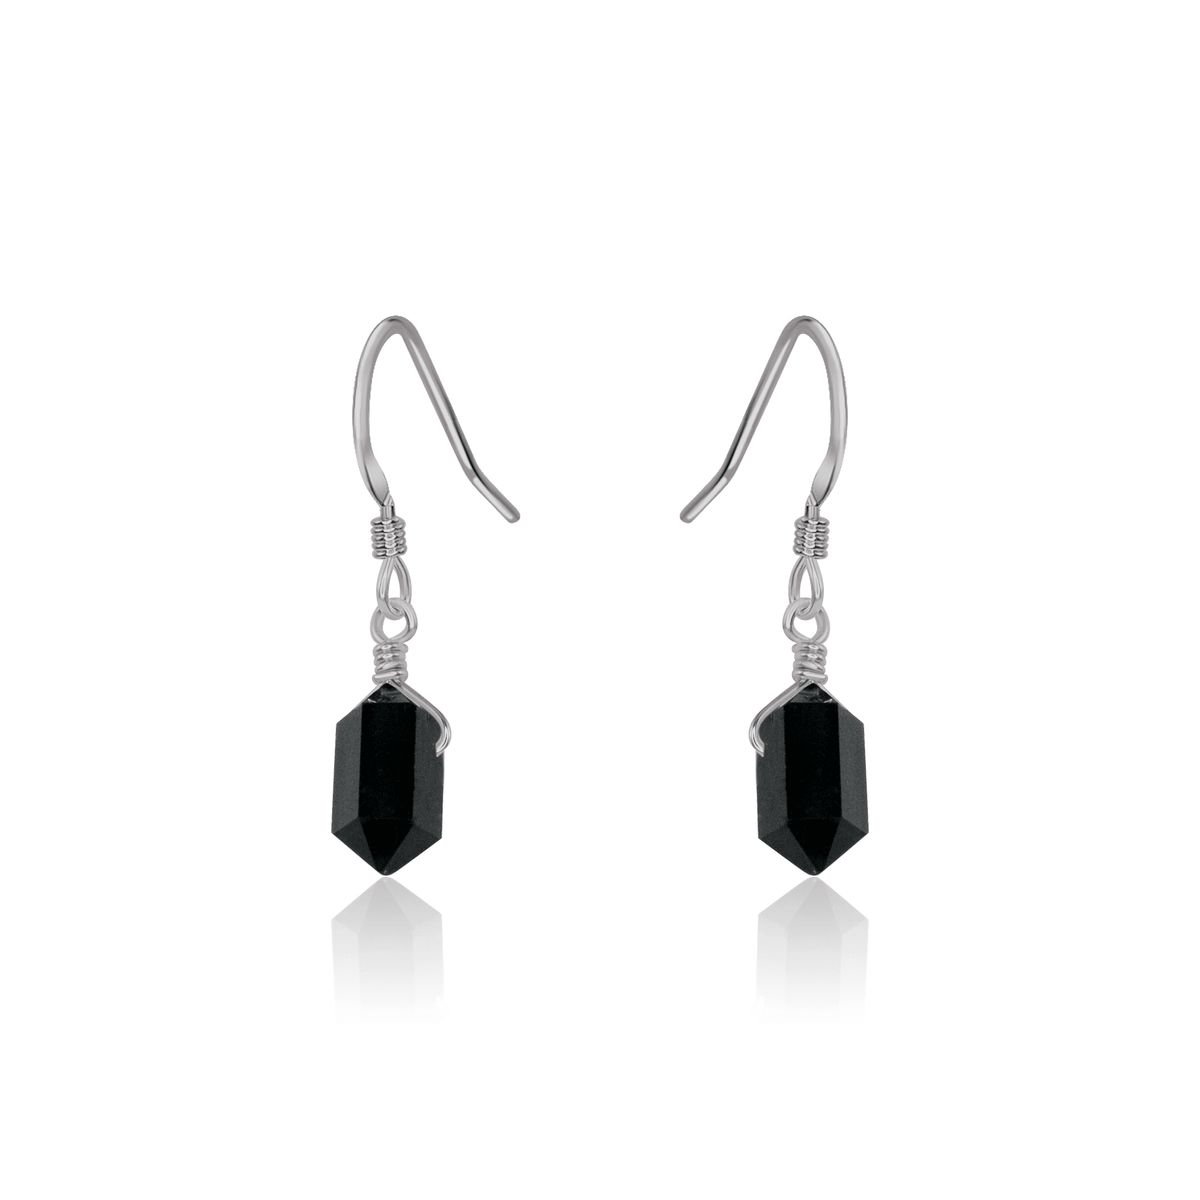 Double Terminated Crystal Dangle Drop Earrings - Black Tourmaline - Stainless Steel - Luna Tide Handmade Jewellery